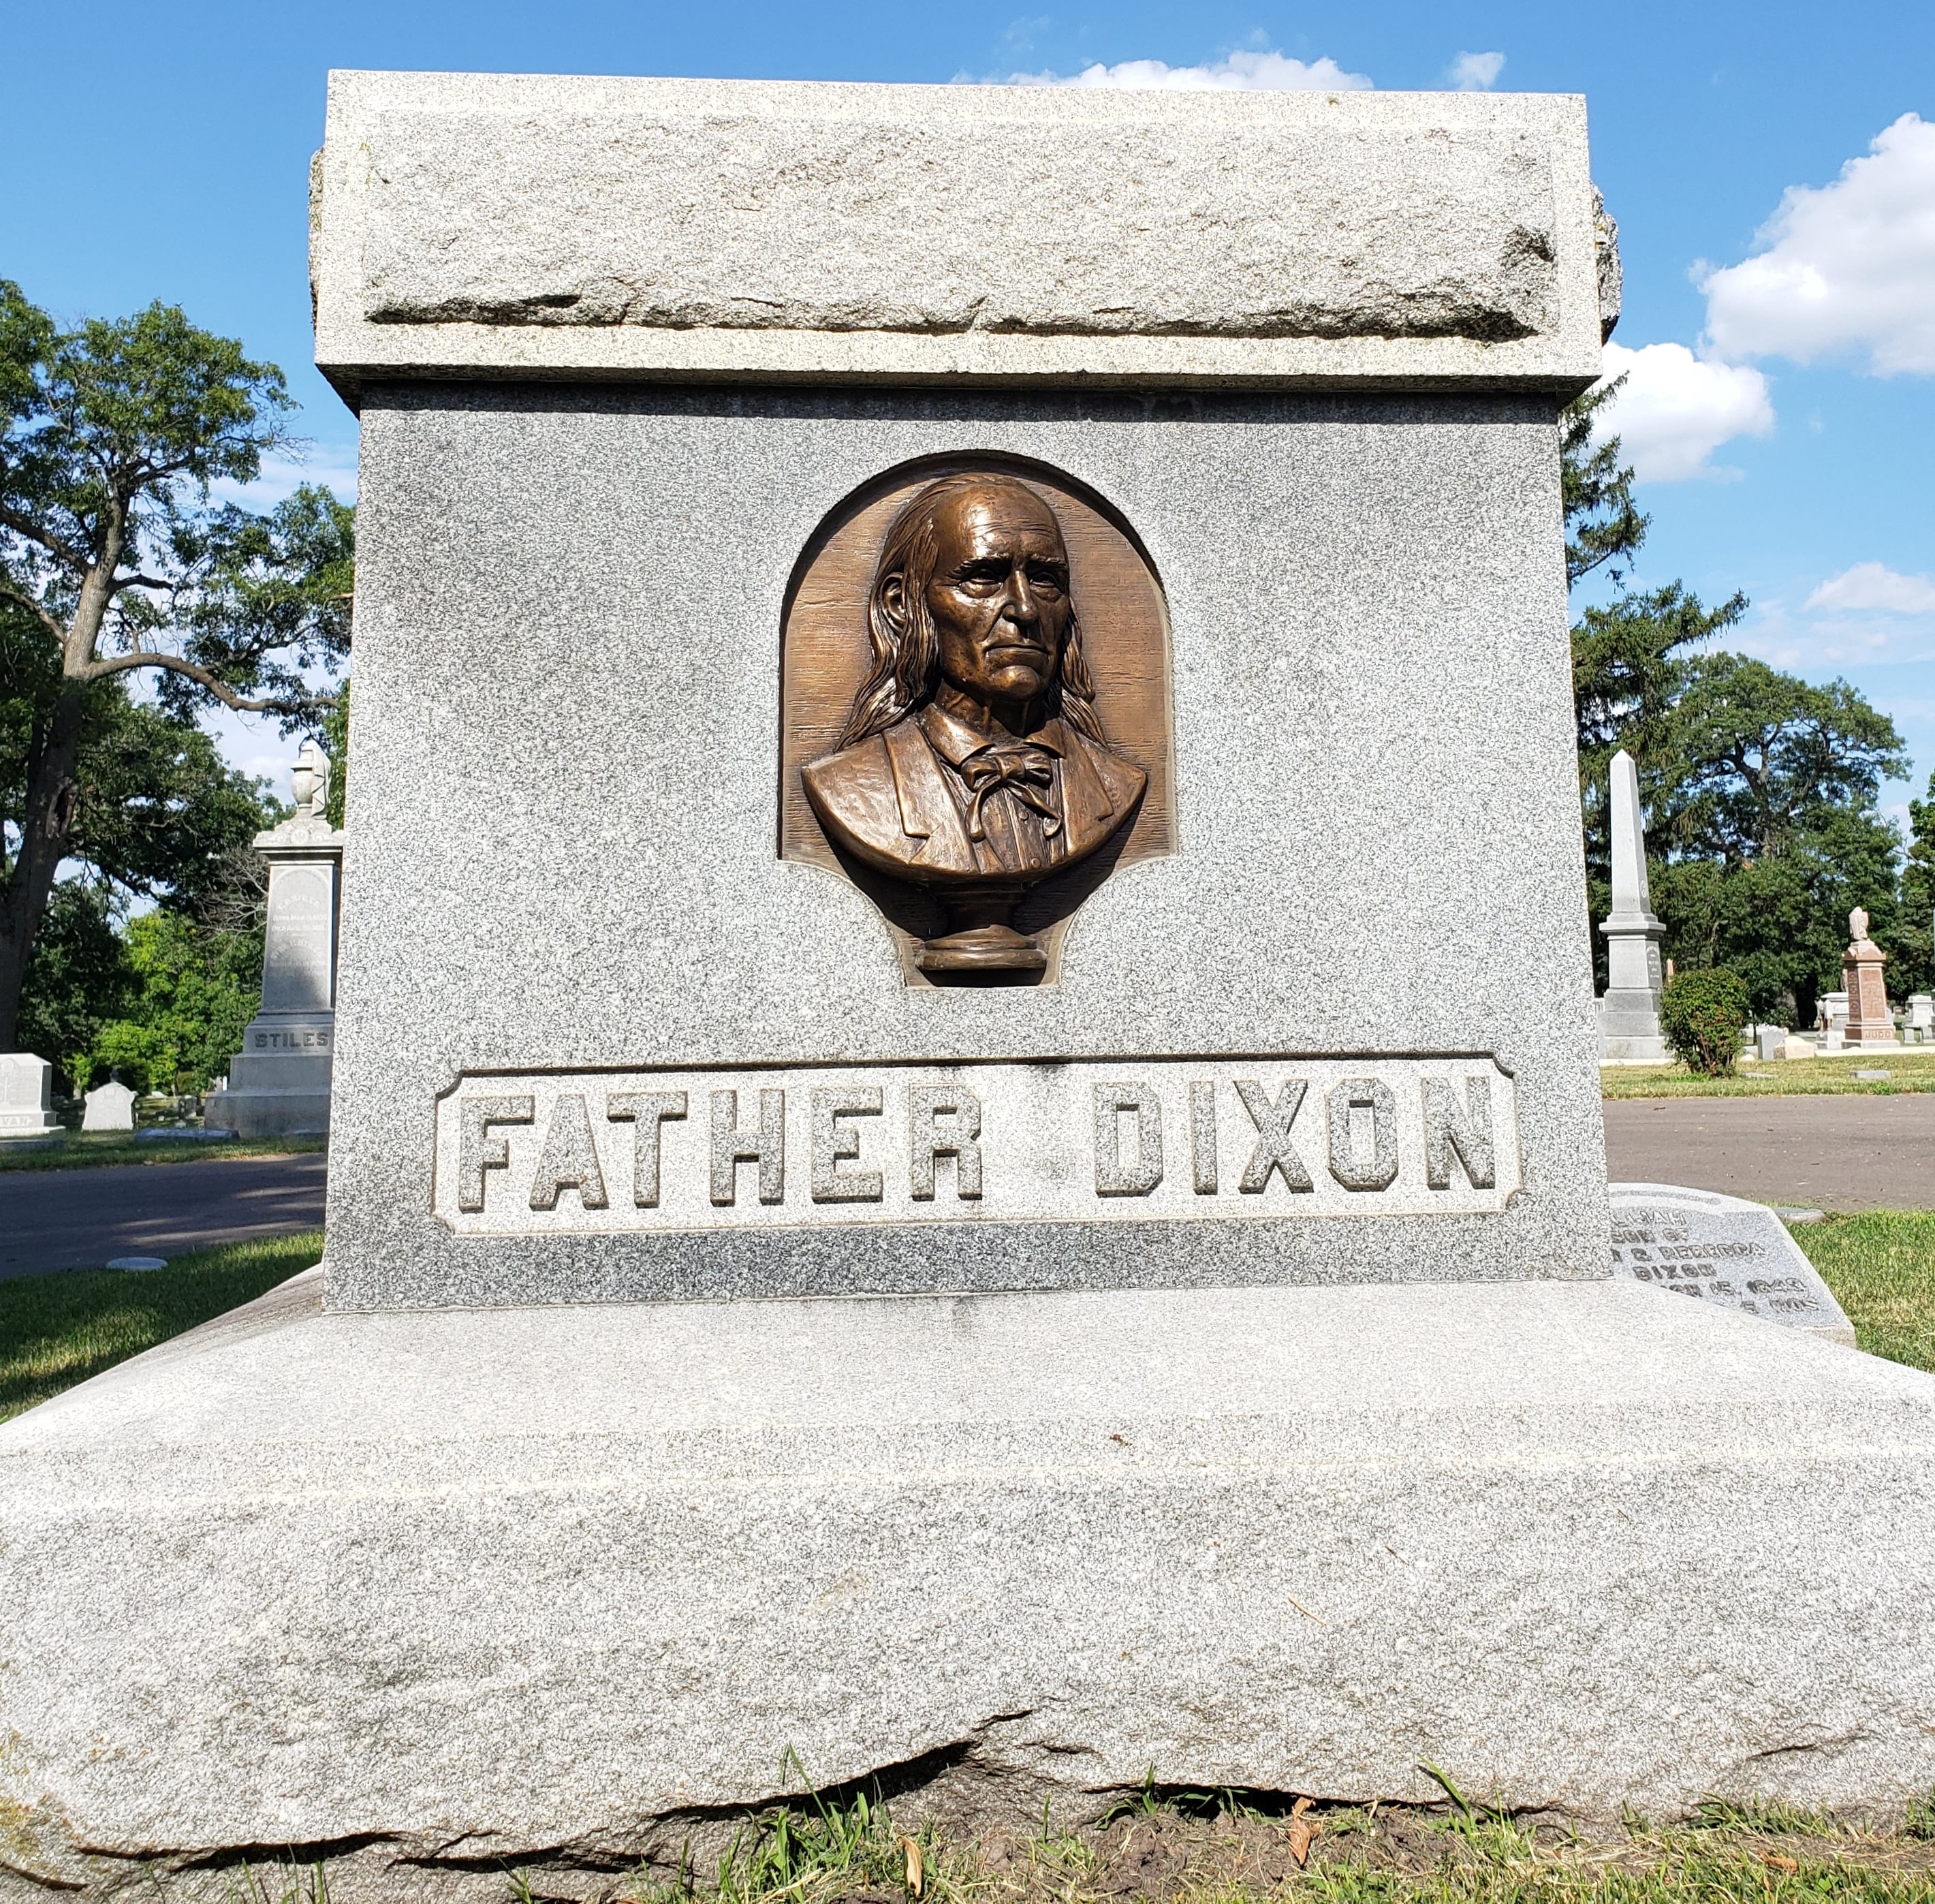 A Piece of Dixon History: Why Dixon loved John Dixon